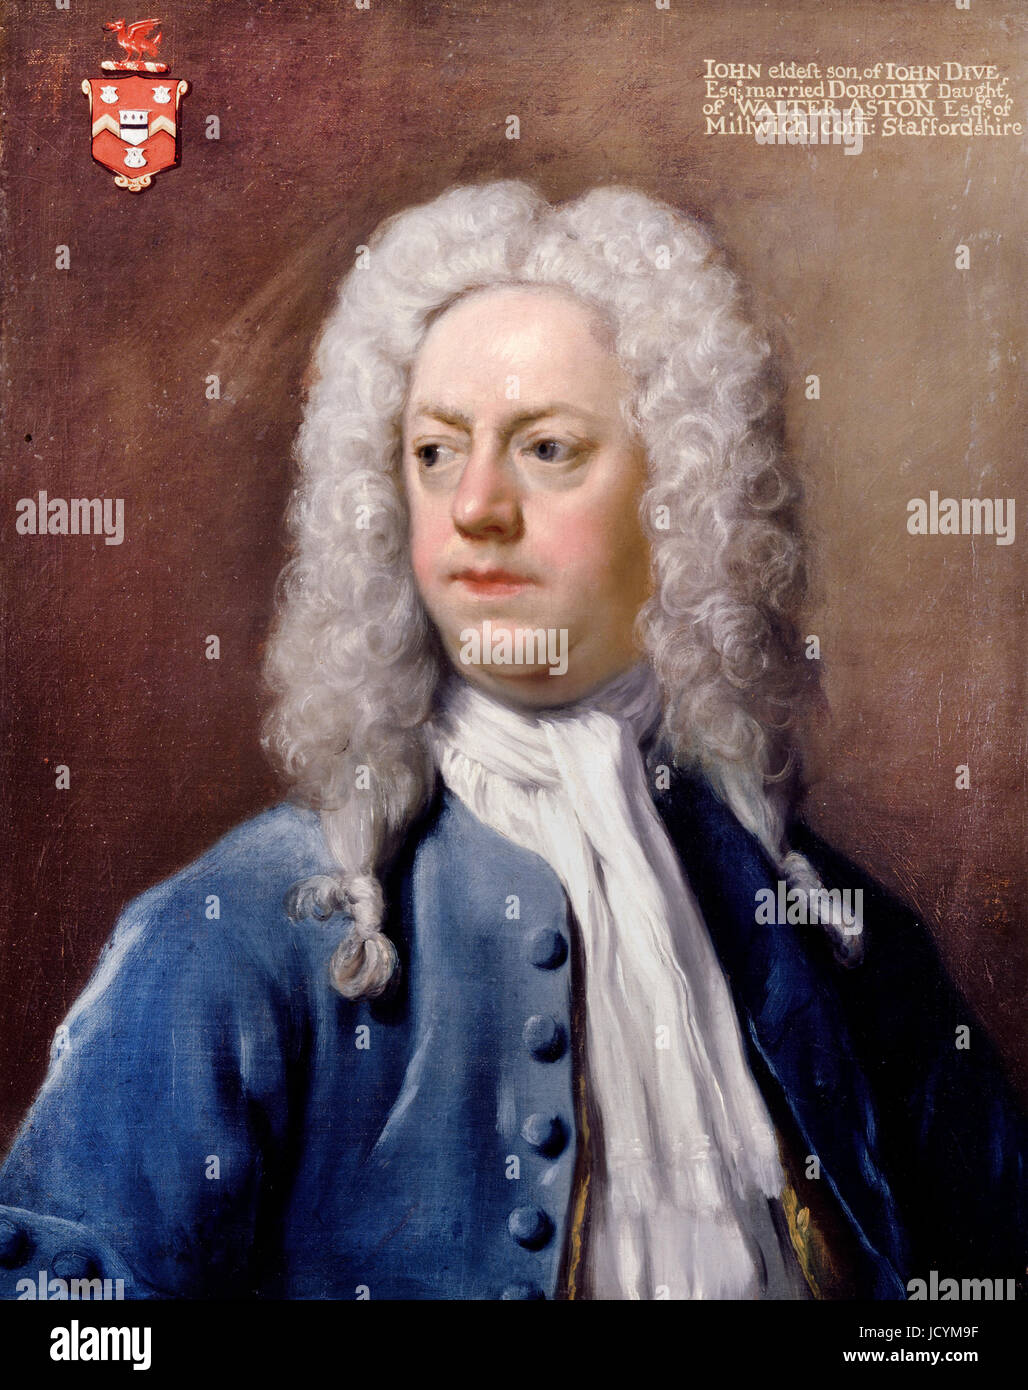 Hans Hysing, John Dive. Circa 1730. Olio su tela. Dulwich Picture Gallery di Londra, Inghilterra. Foto Stock